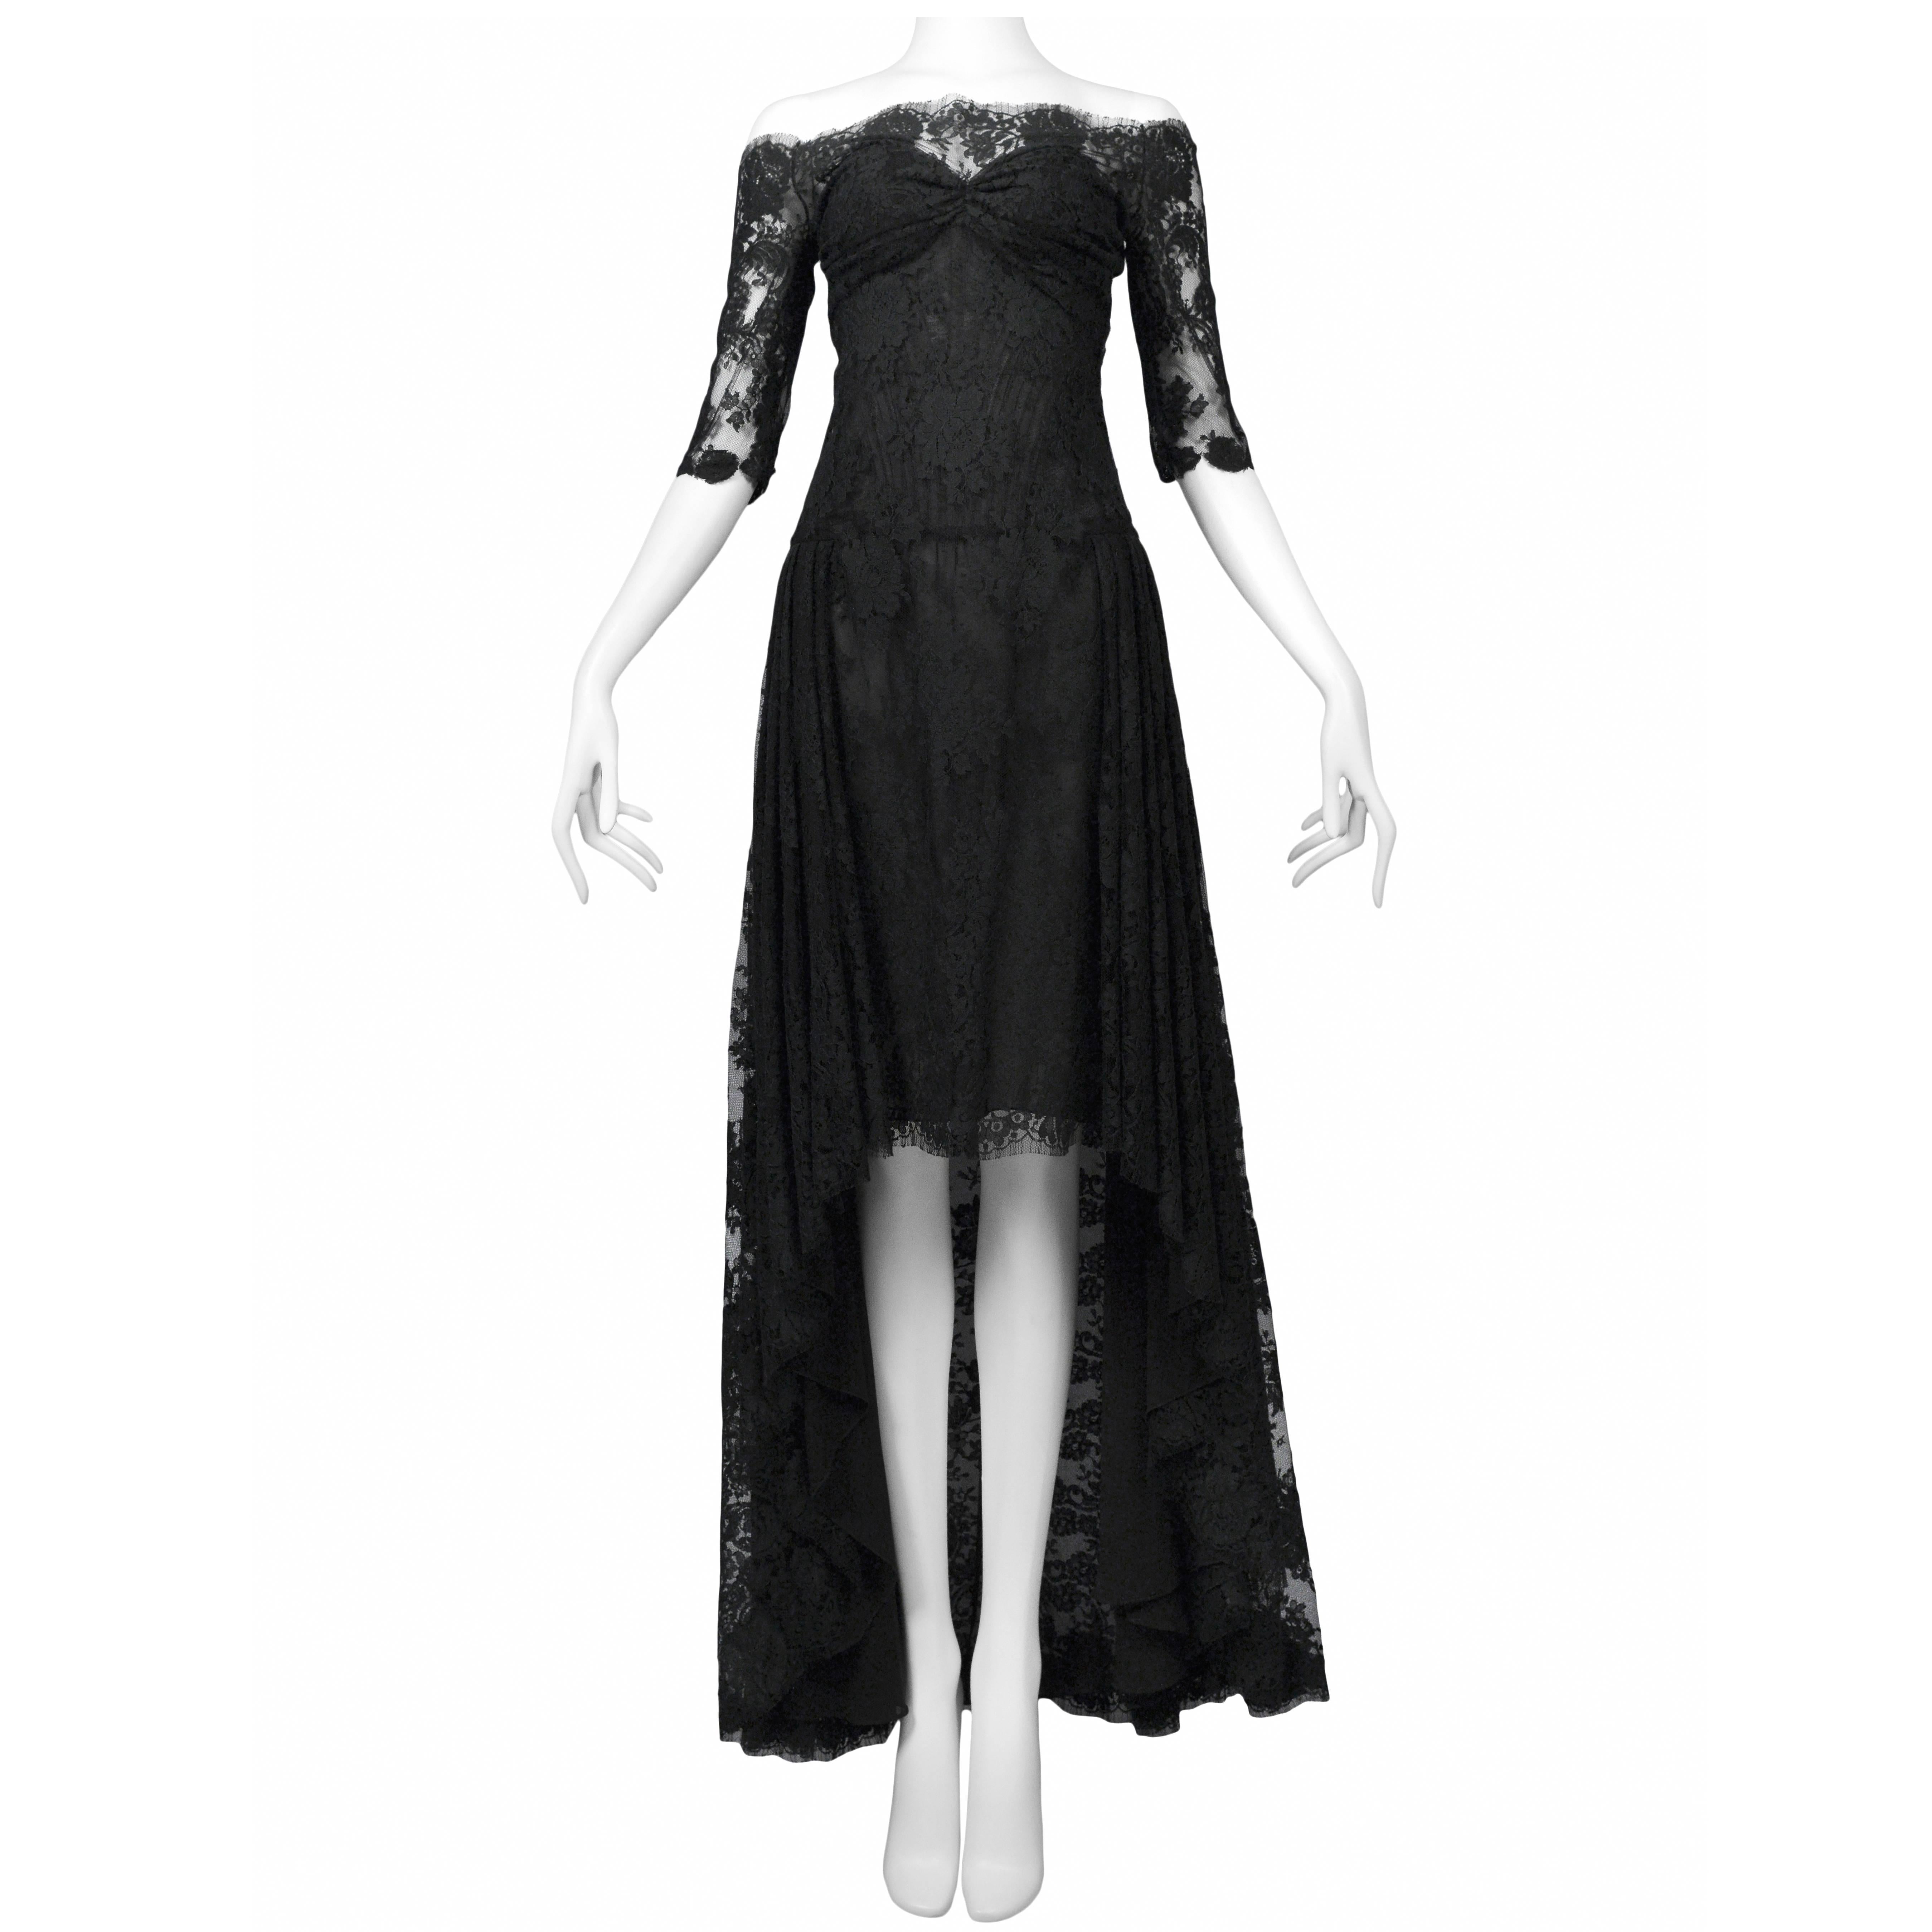 McQueen Sarabande Collection Gown 